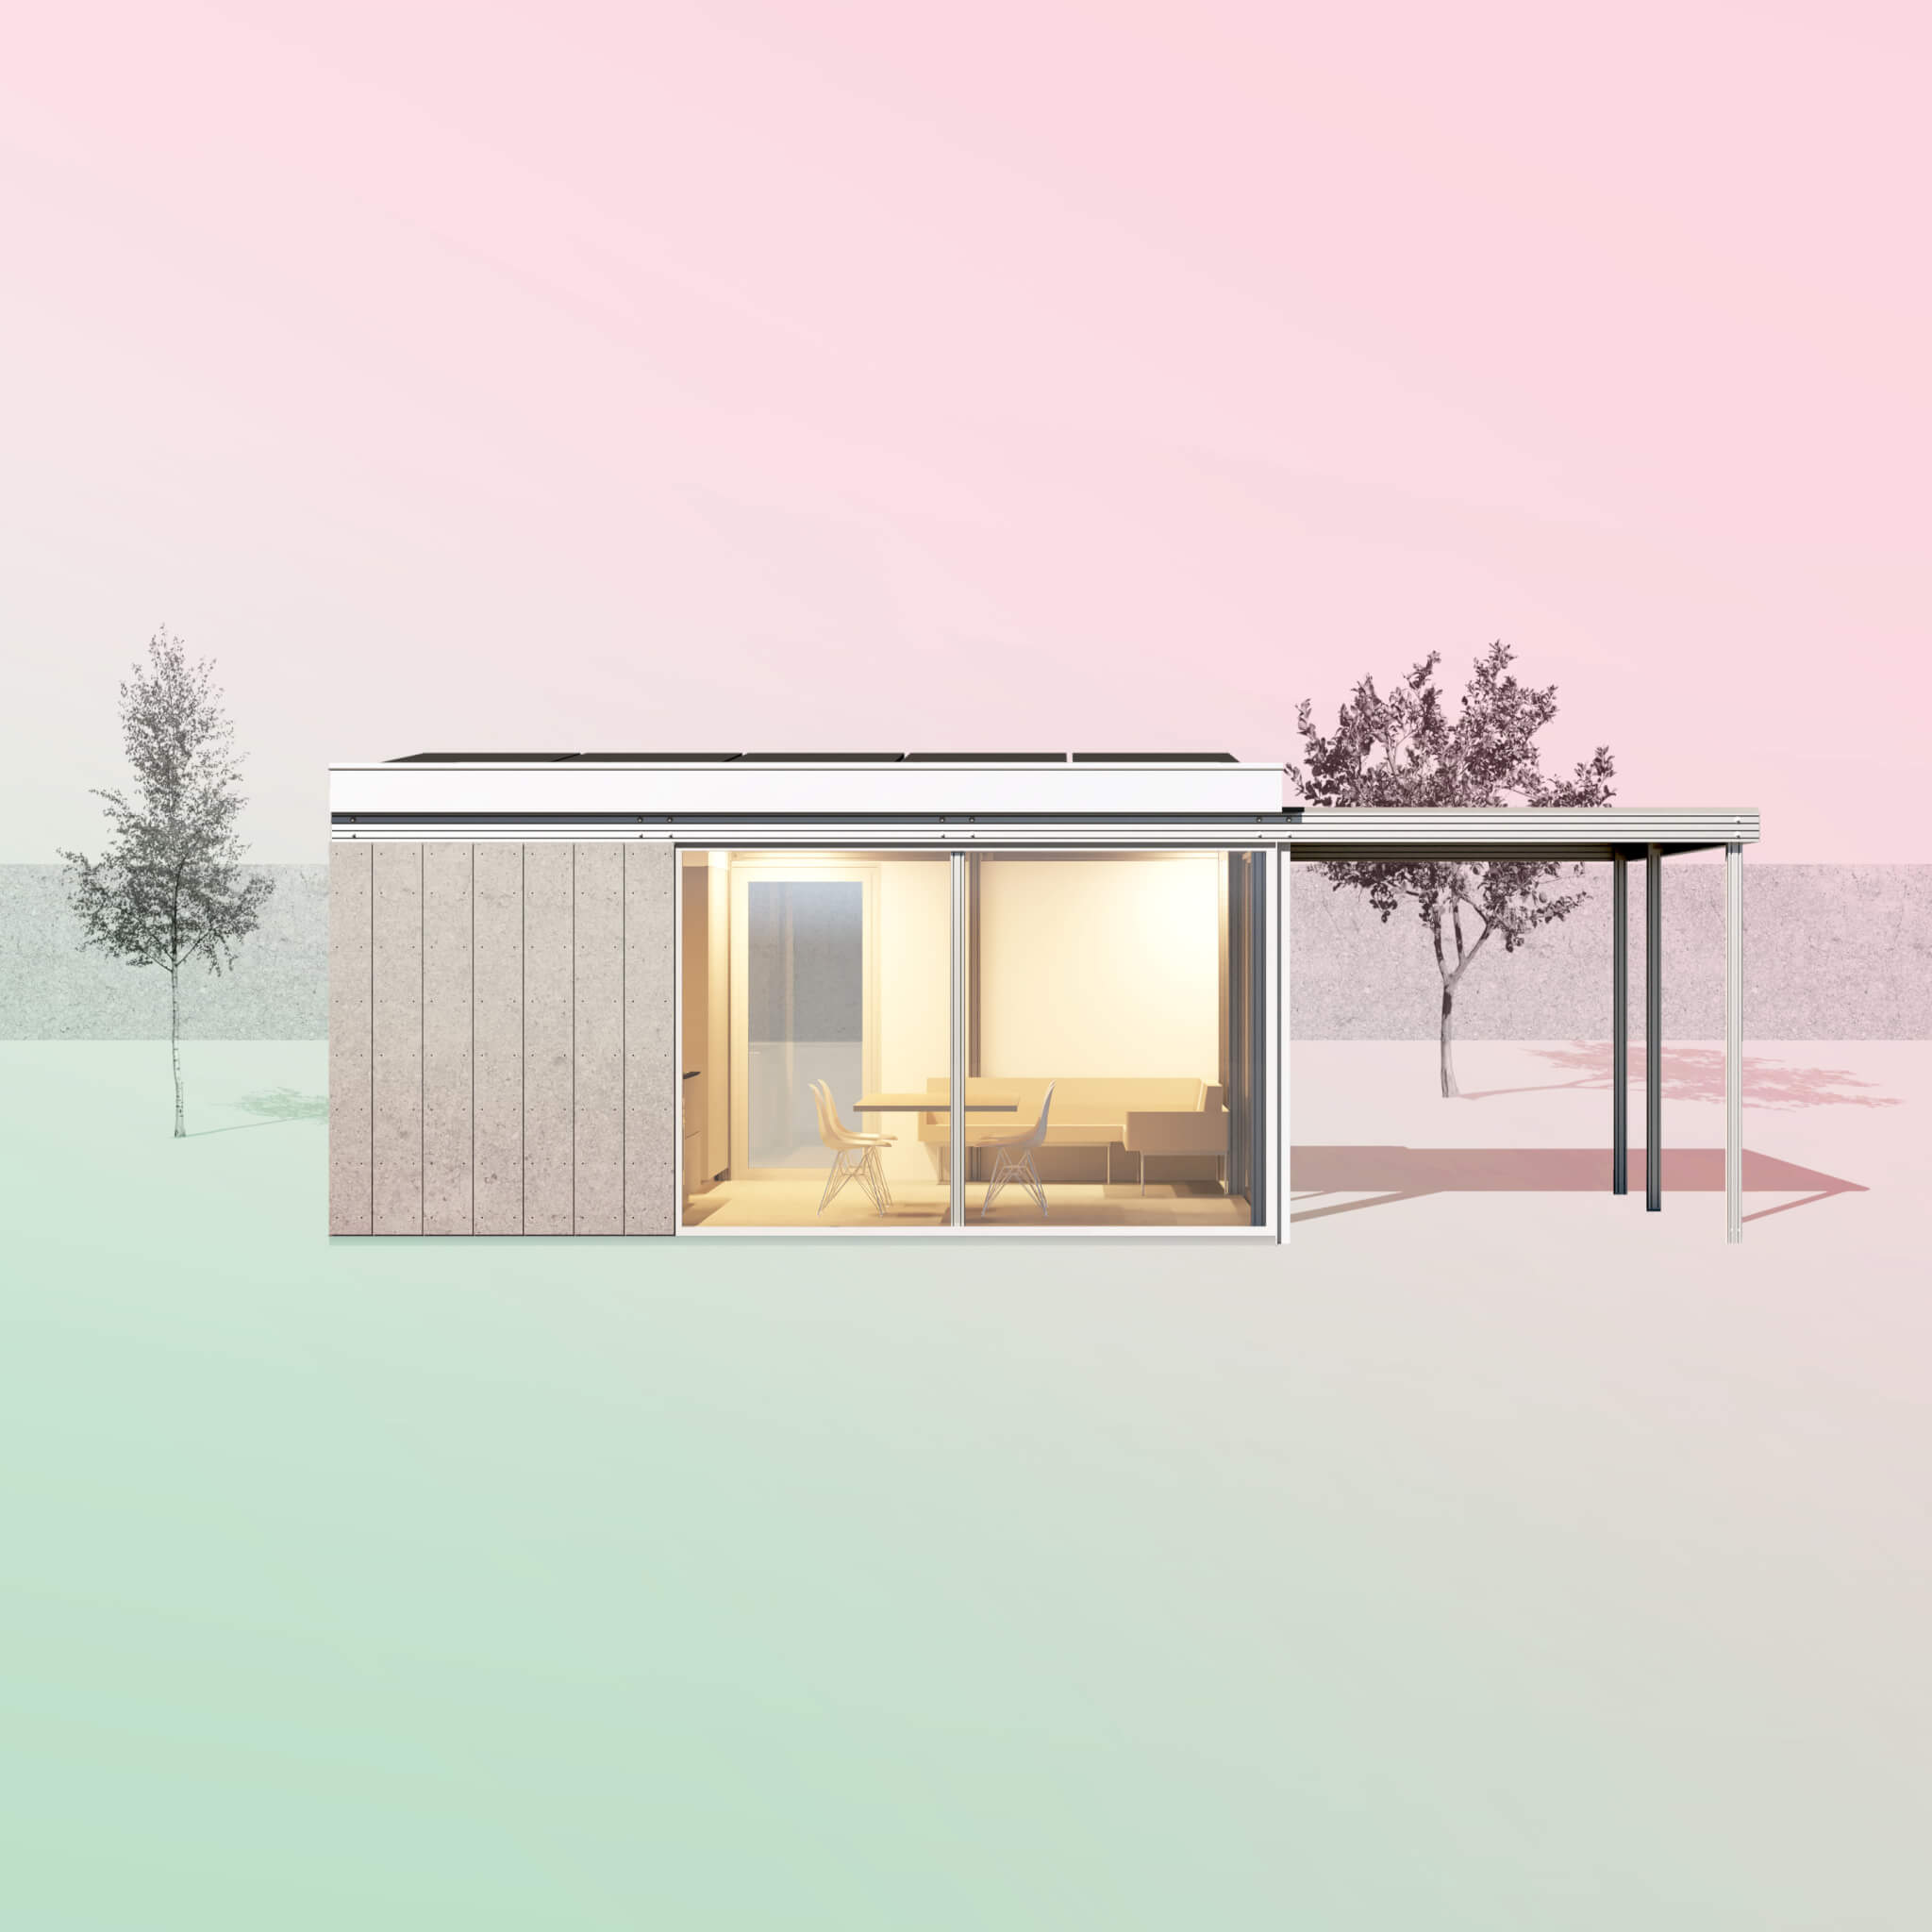 rendering of a petite backyard home